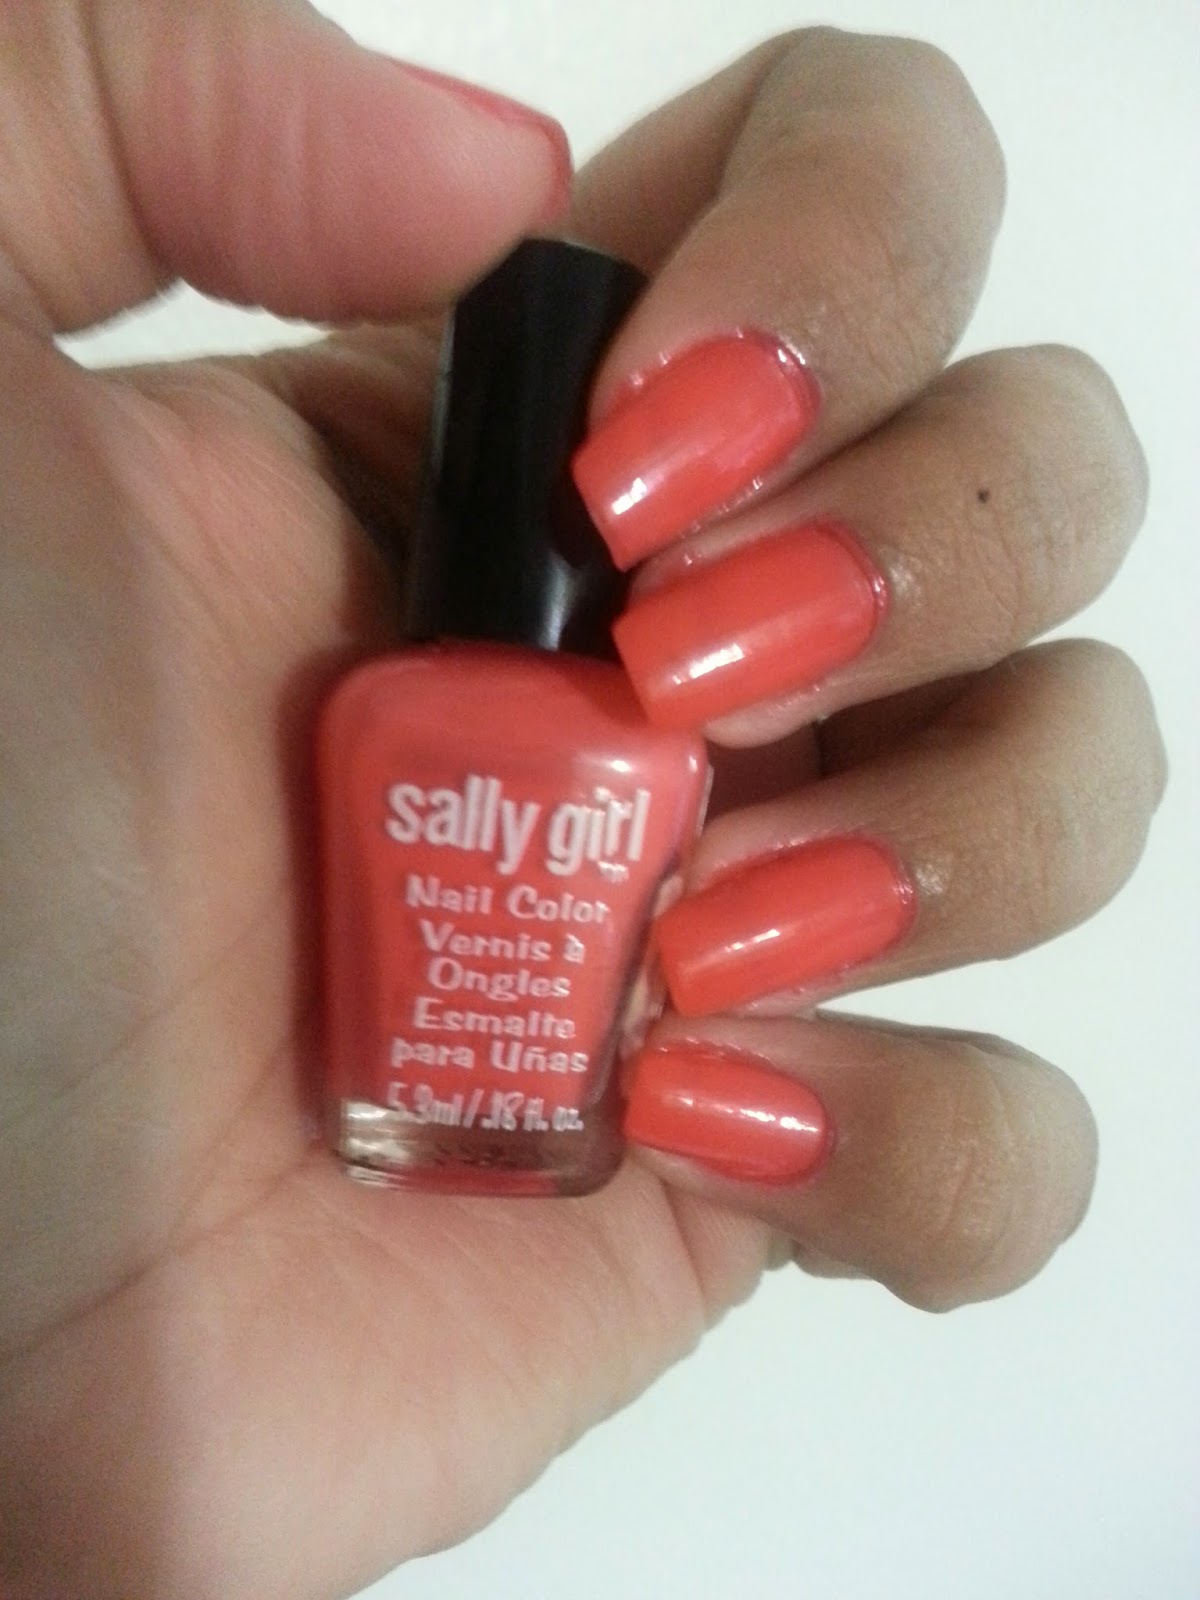 Sally girl reviews, neon nail paint, nail color reviews, latest nail color trends 